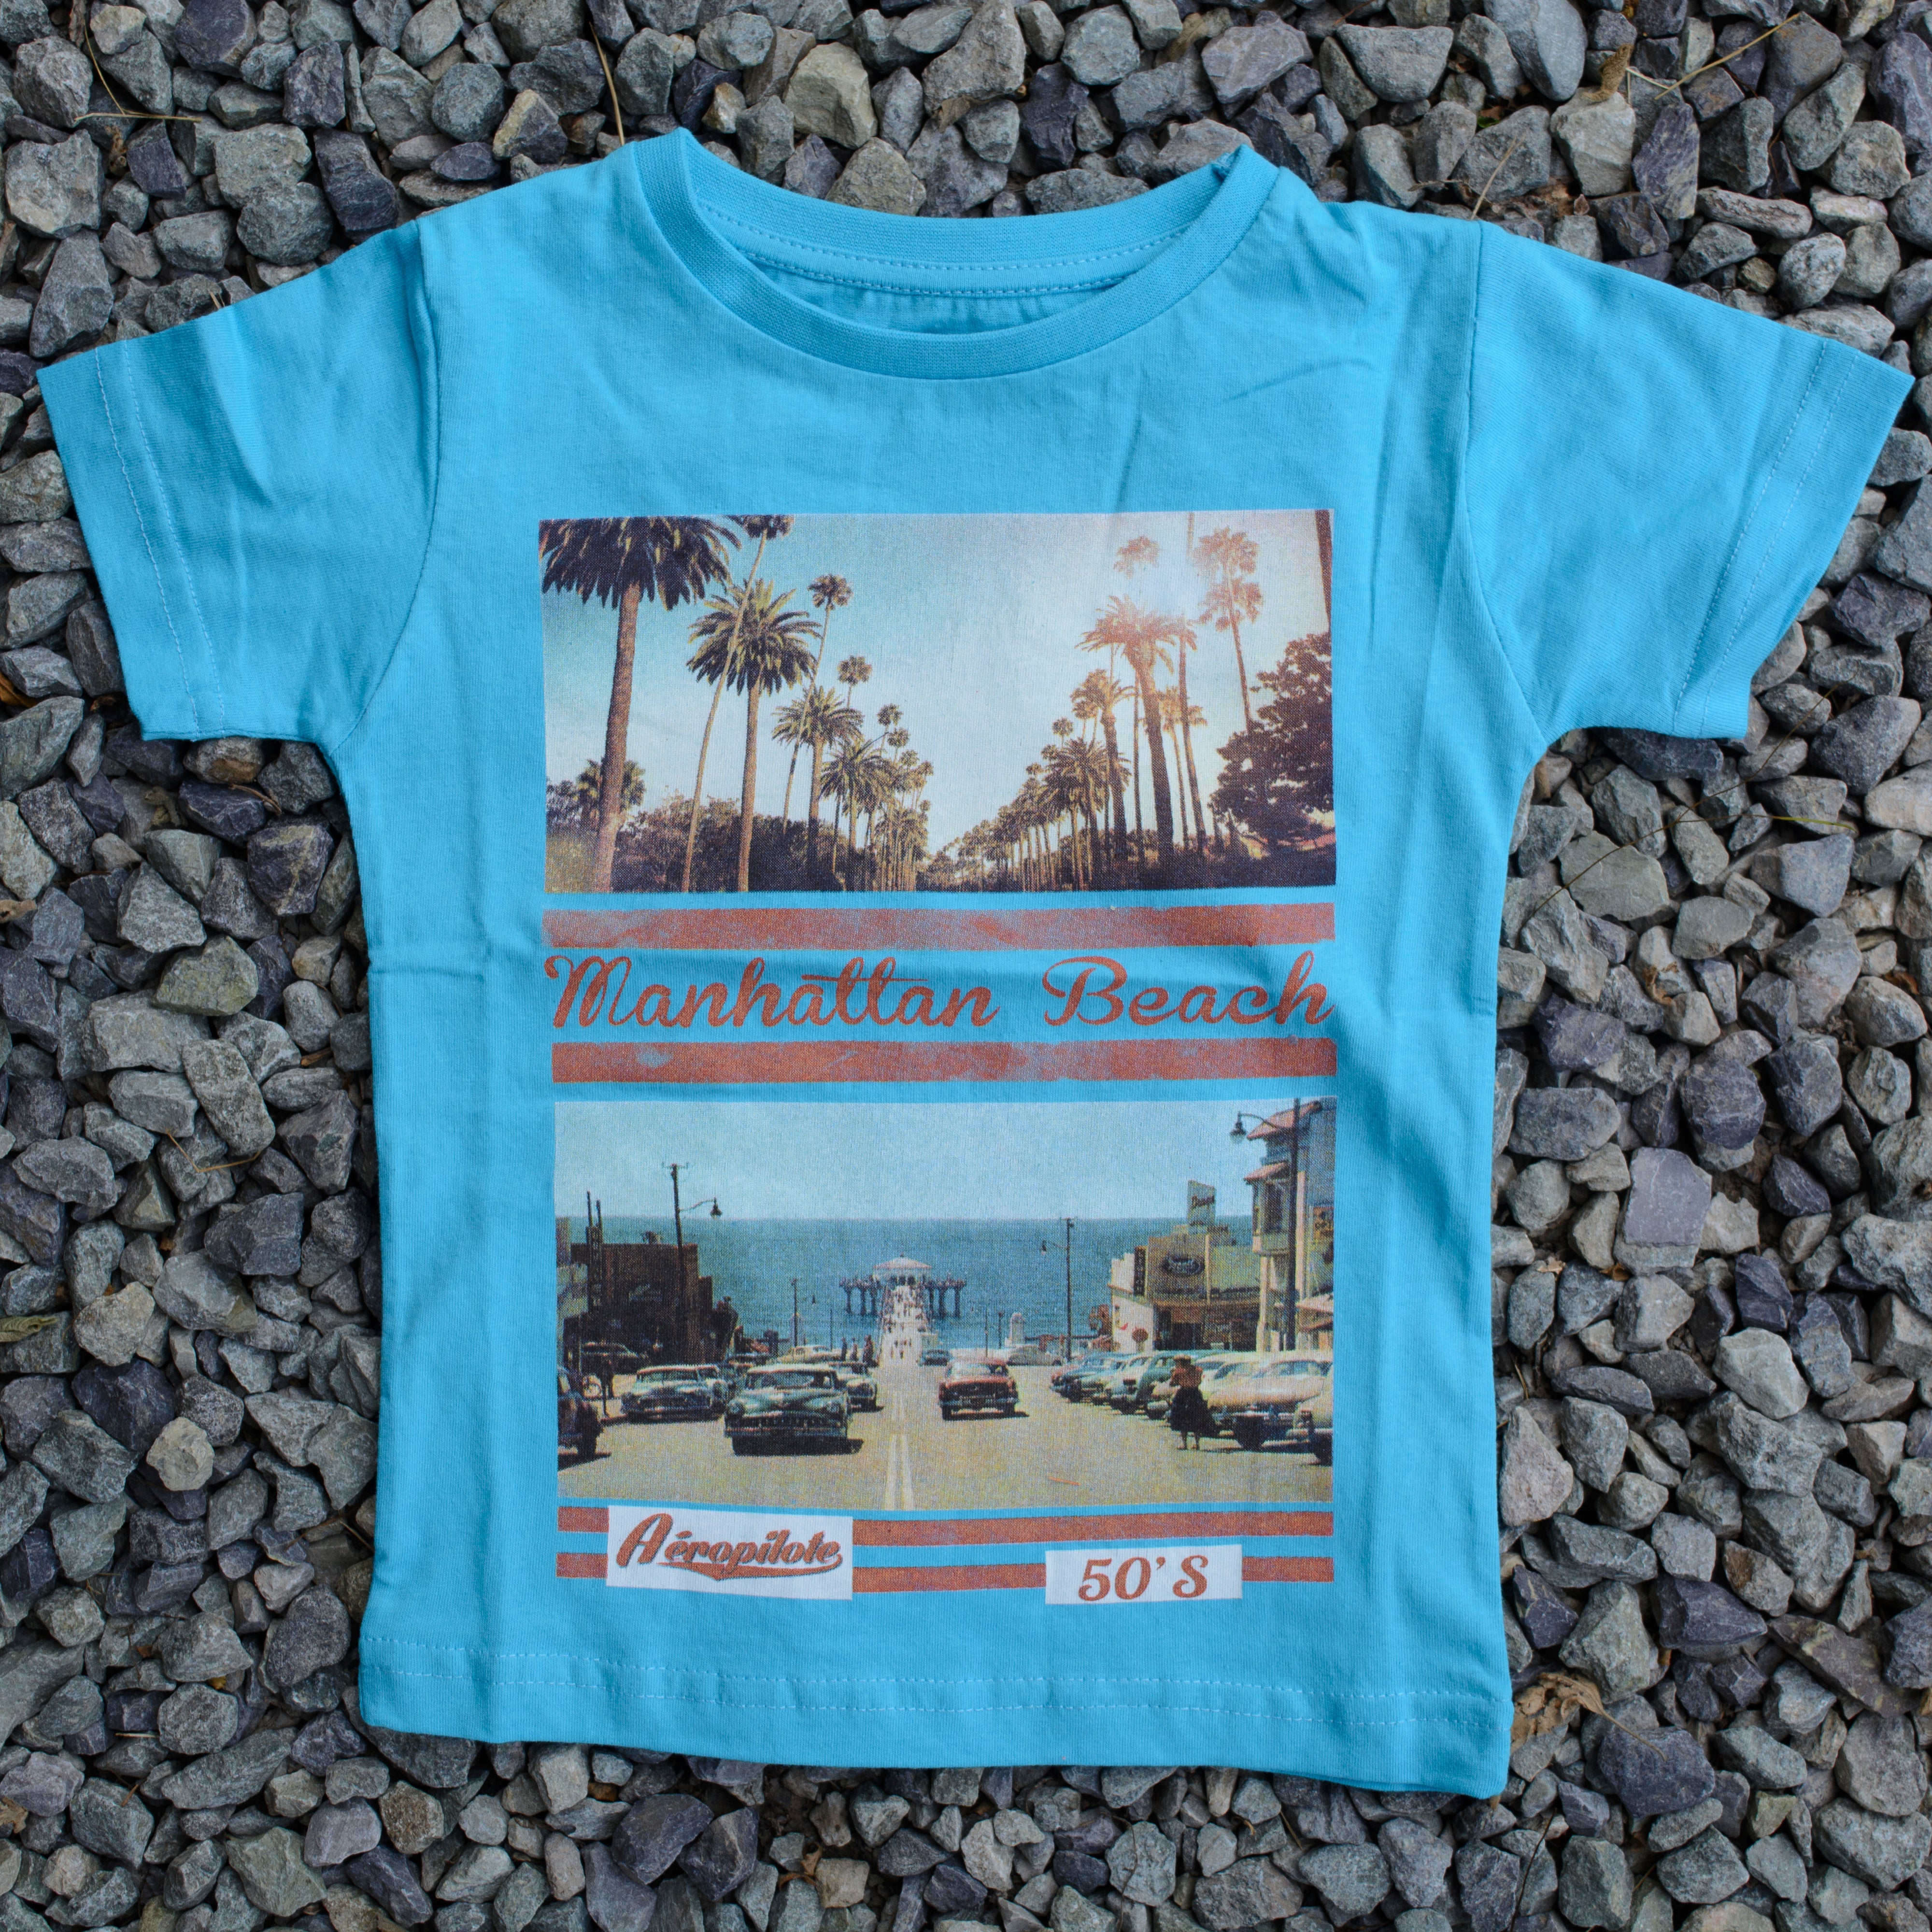 Manhattan Beach - Beautiful Cotton T-Shirts, Boys' T-Shirts, Navy & Blue Baby T-Shirt - Wear Sierra